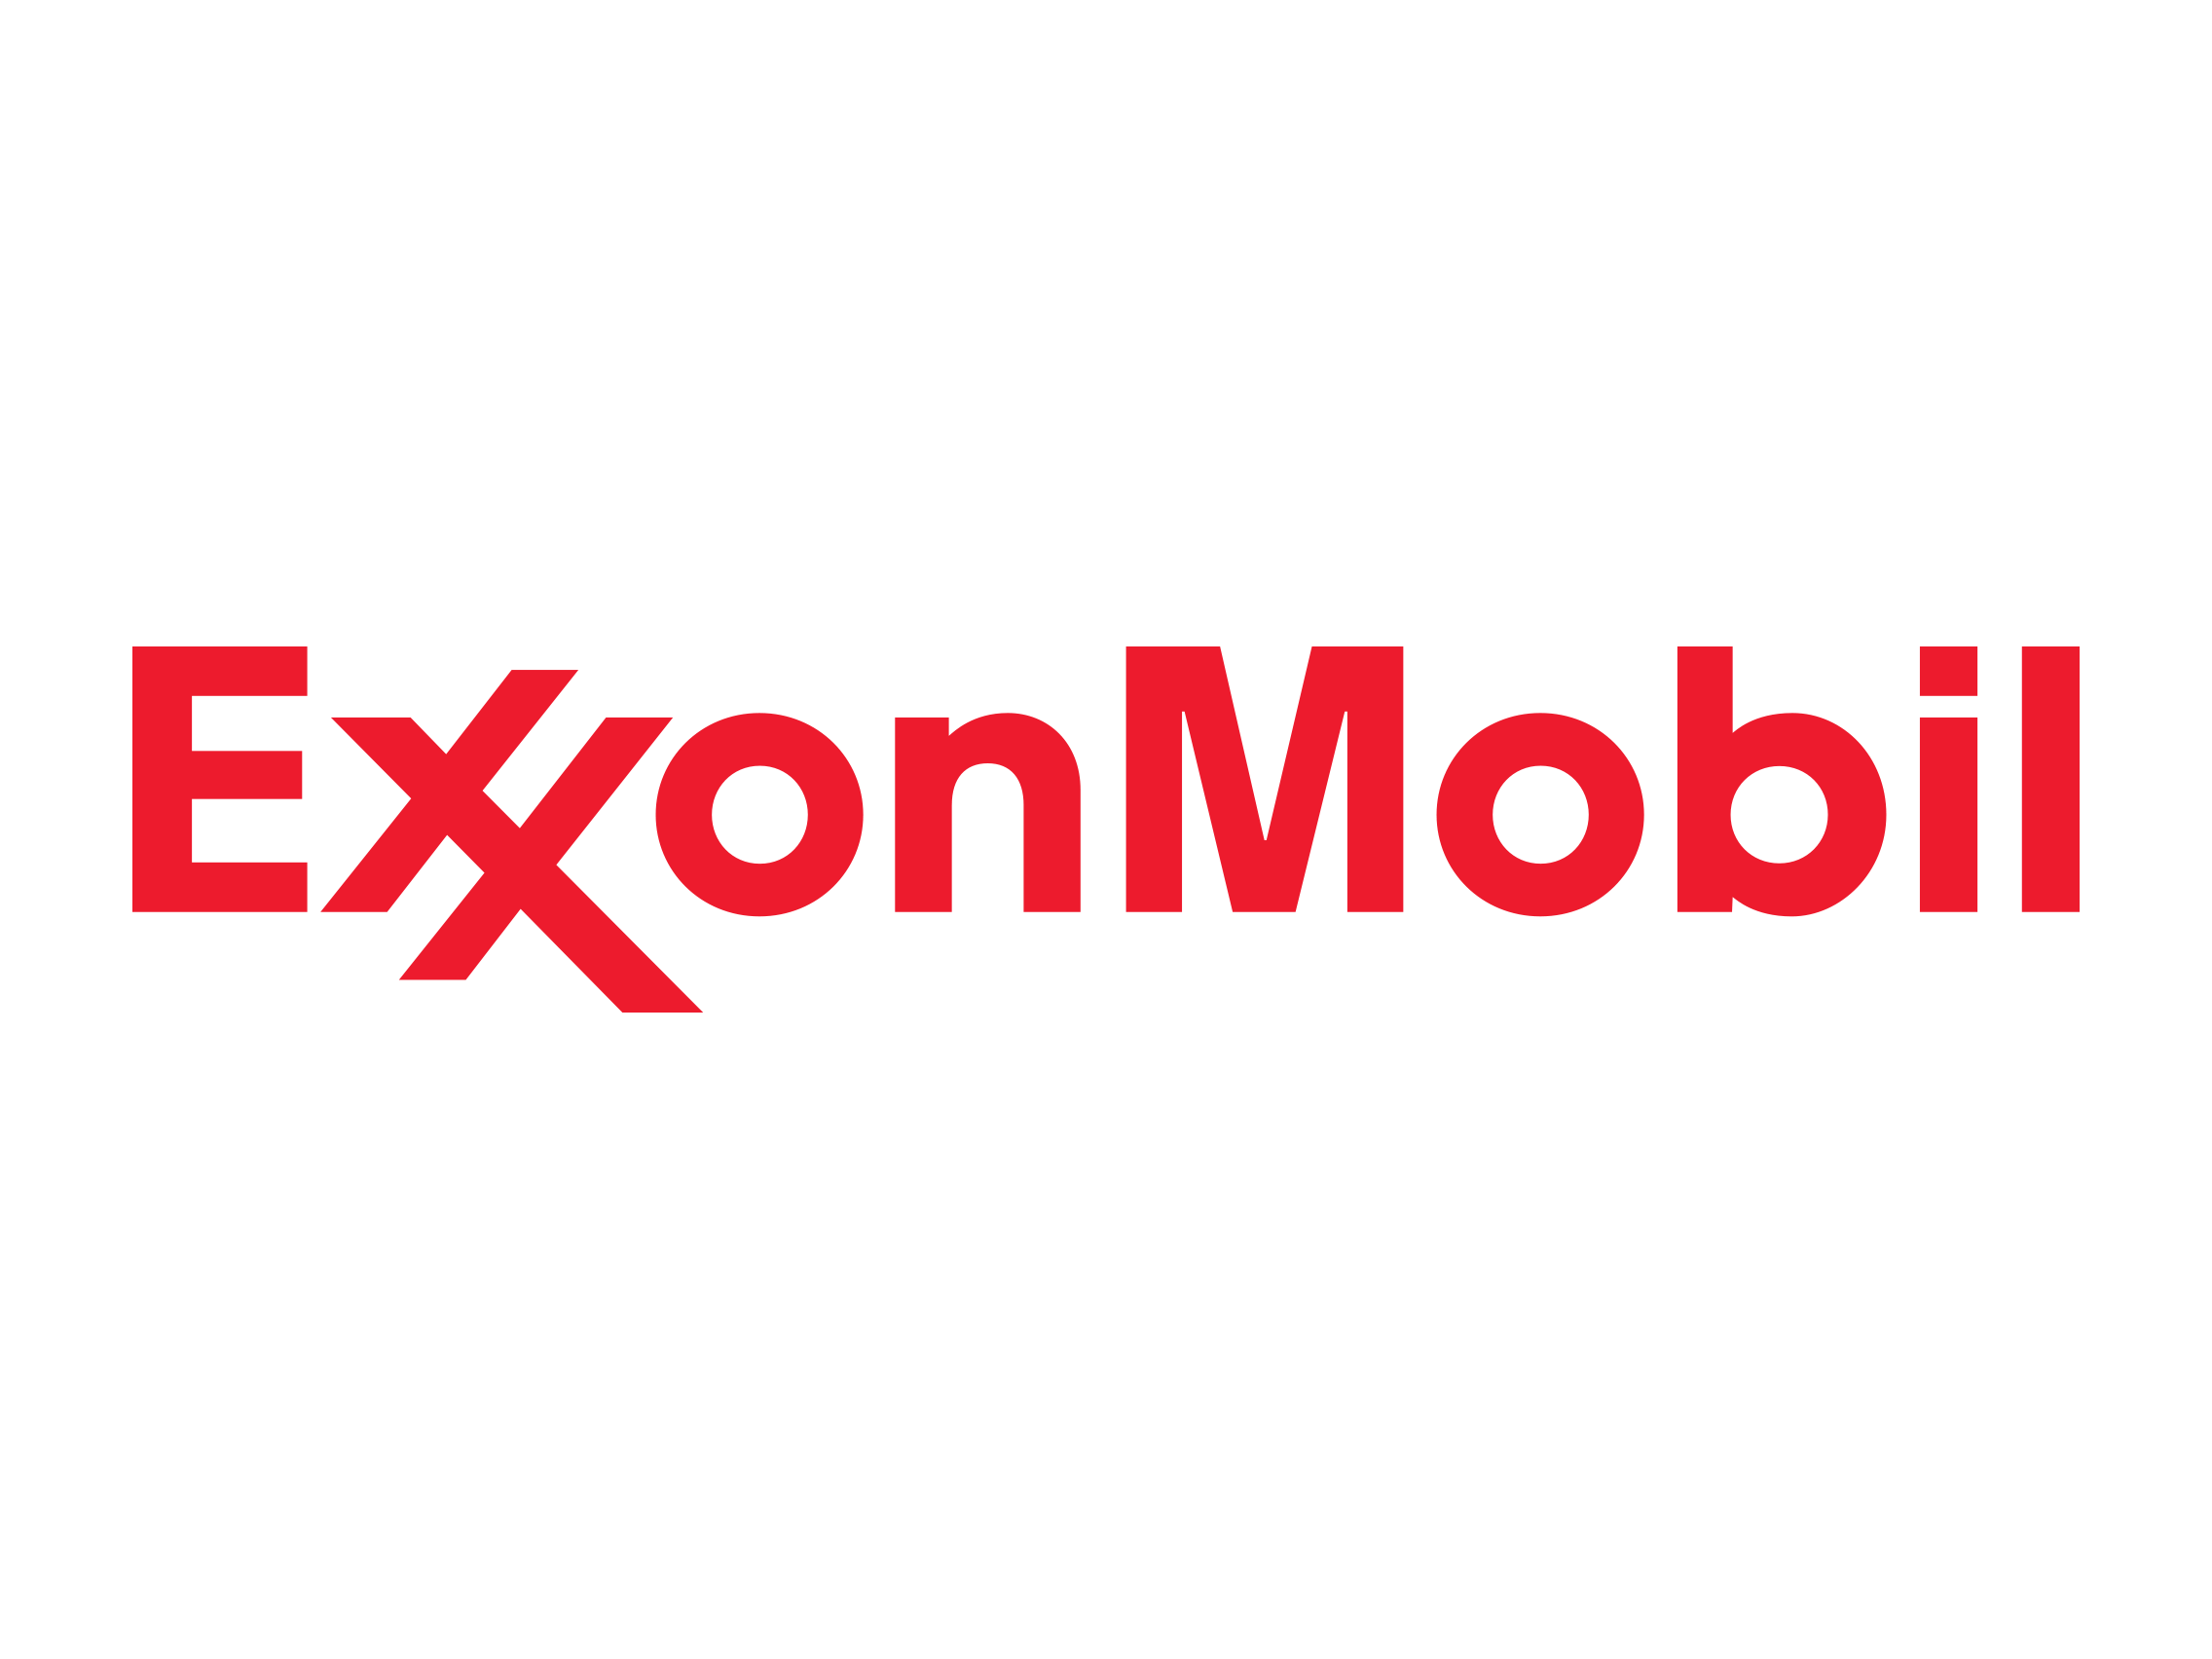 Exxonmobil pipeline Free vect